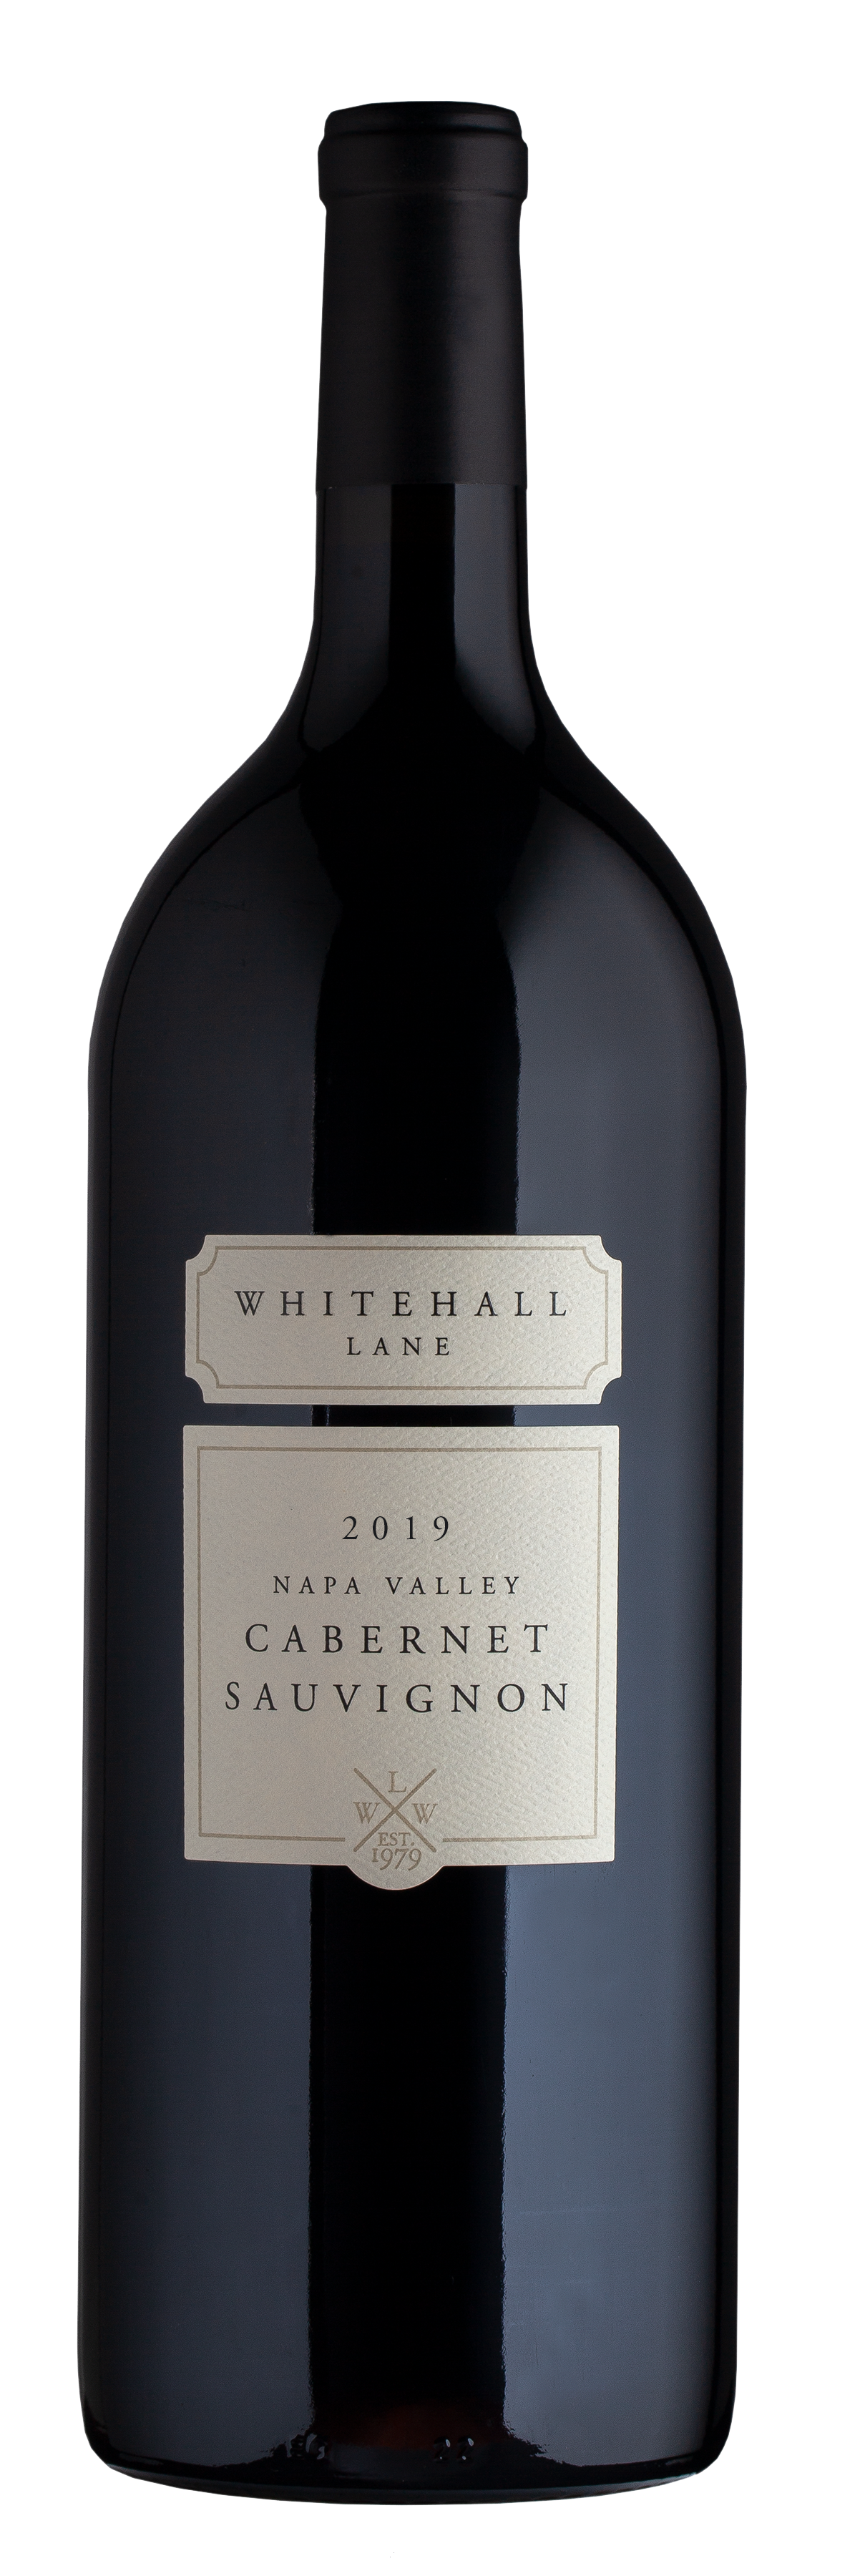 2019 Napa Valley Caberney Sauvignon - Whitehall Lane Wine